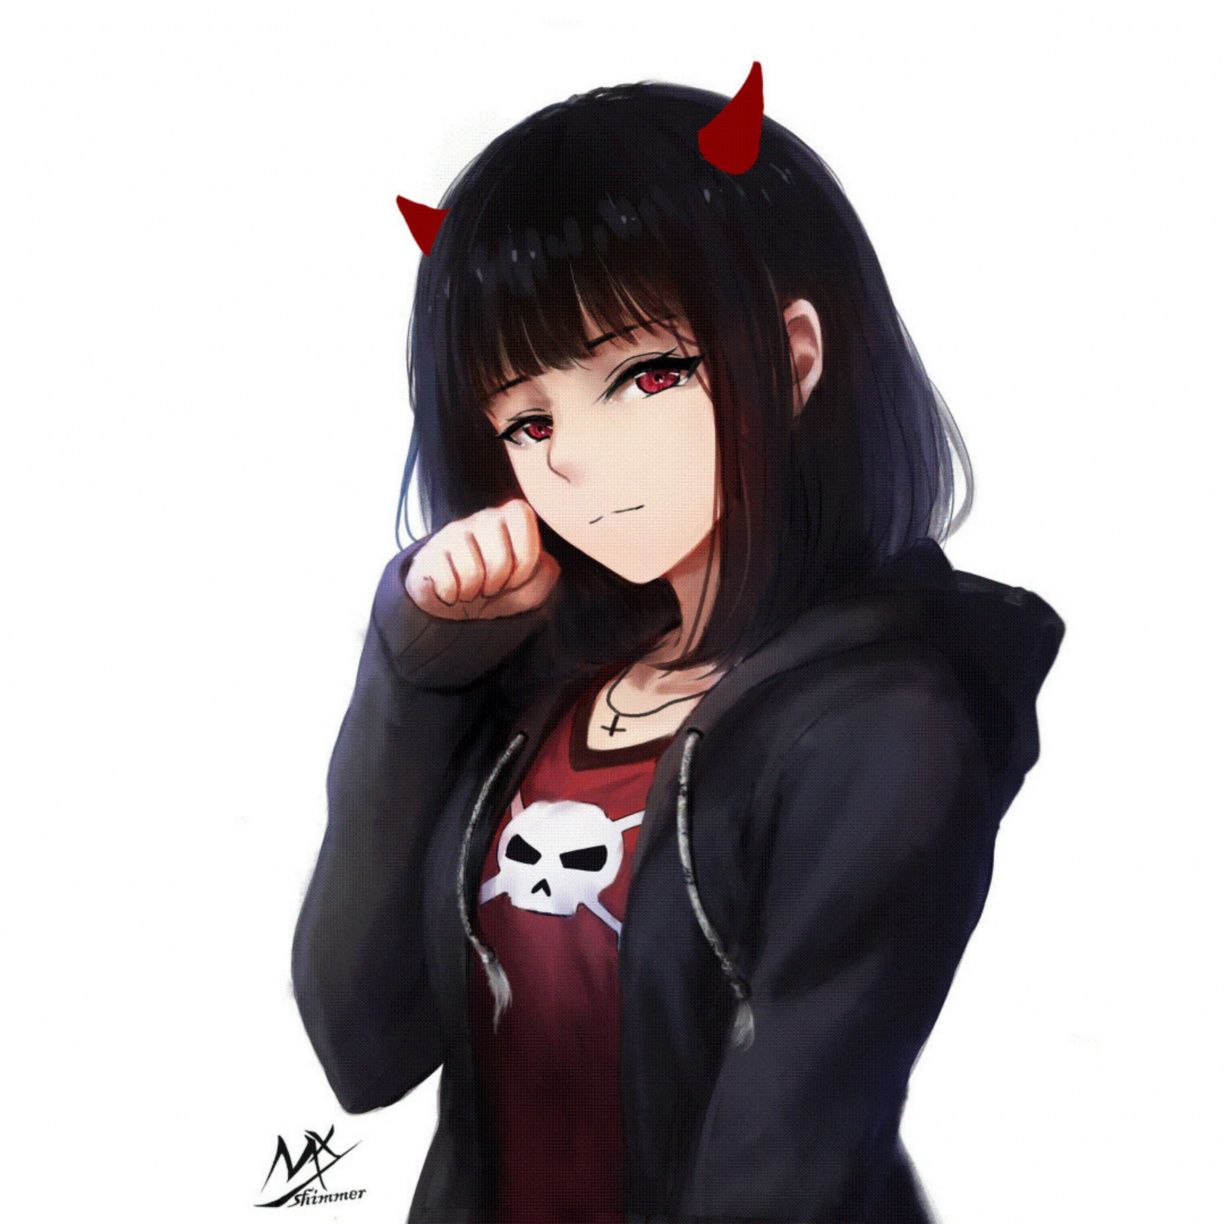 Devil, cute, anime girl, art wallpaper, 4500x2531, hd image, picture, f7eaa417